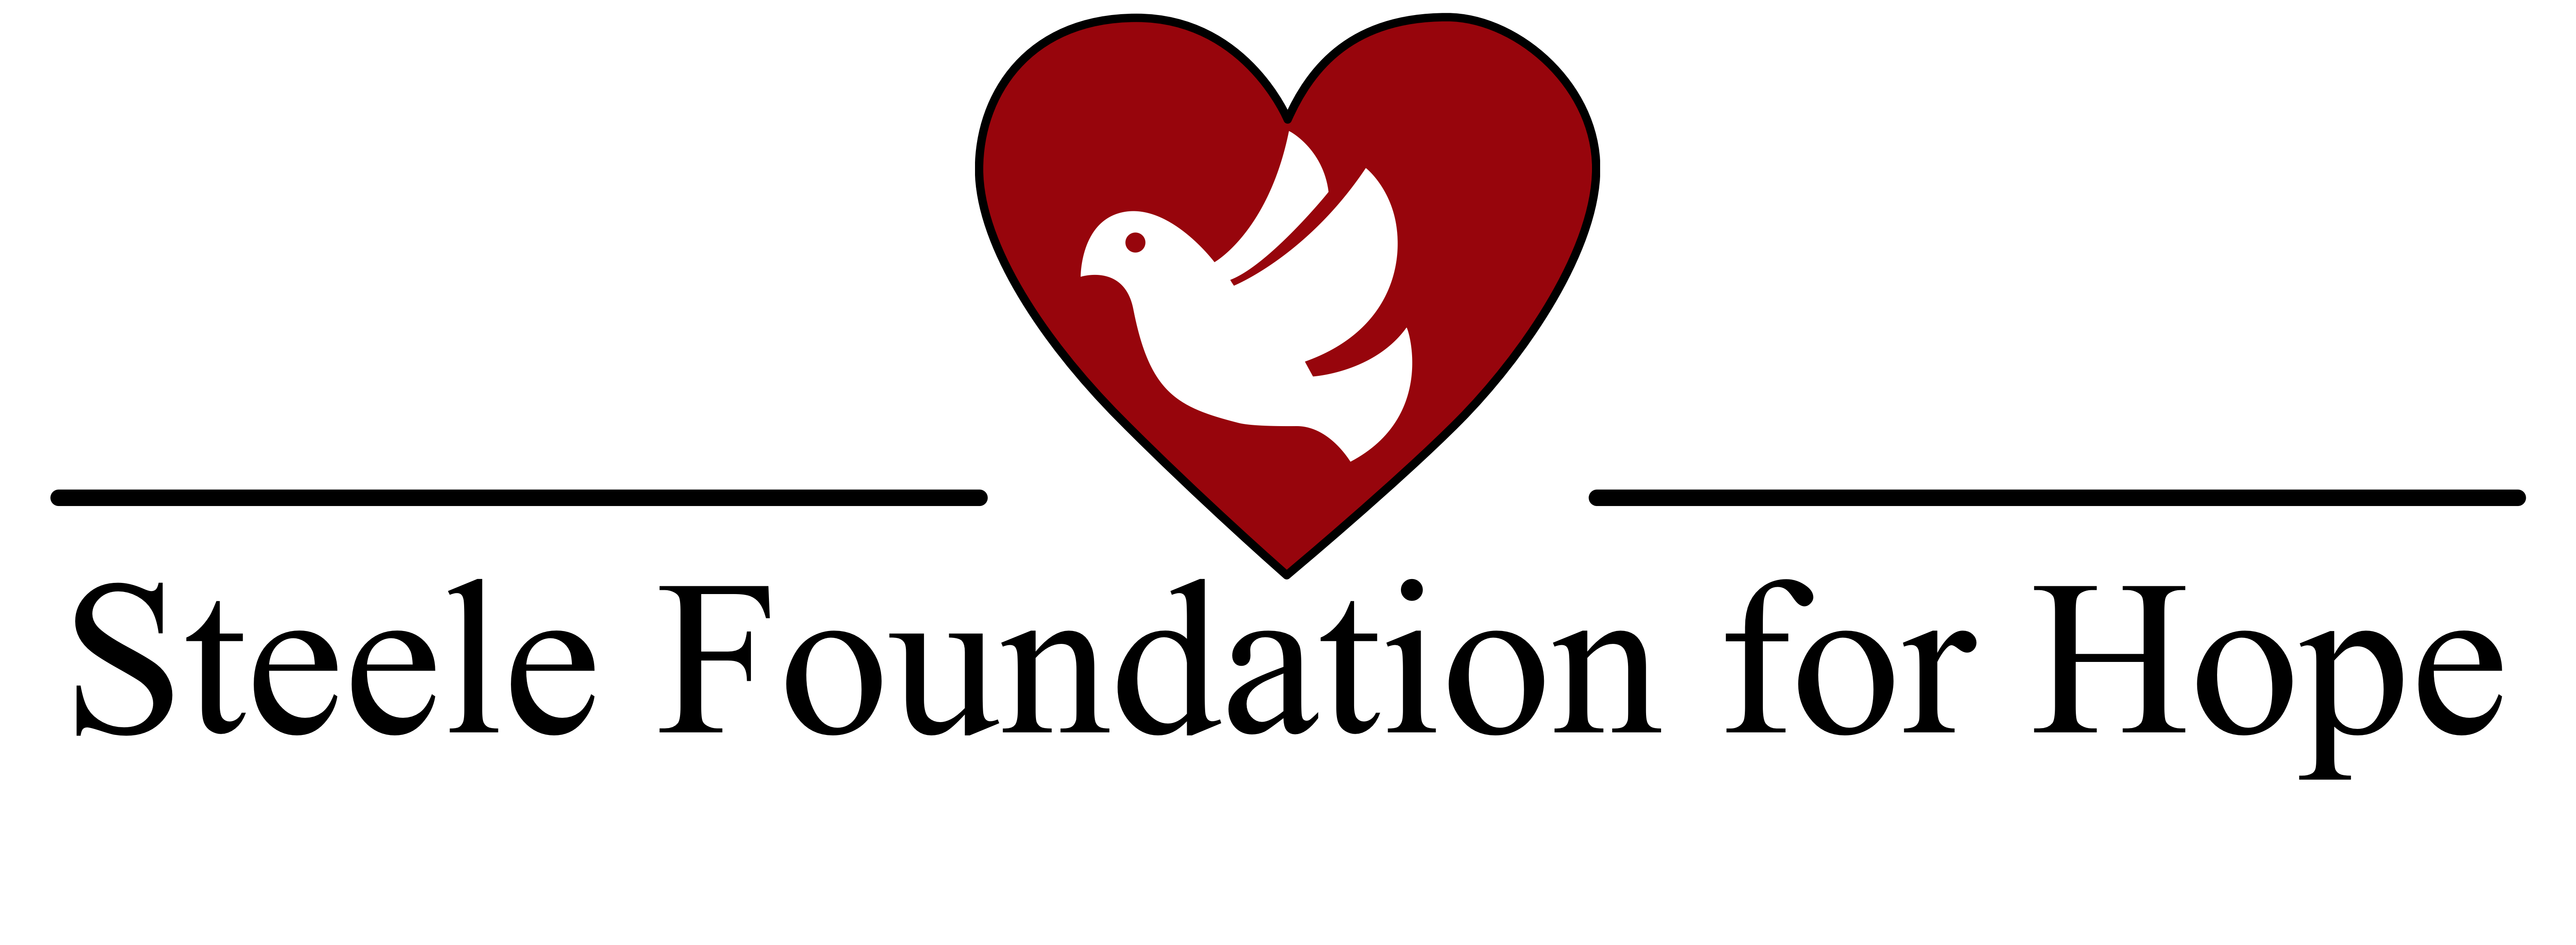 Steele Foundation for Hope